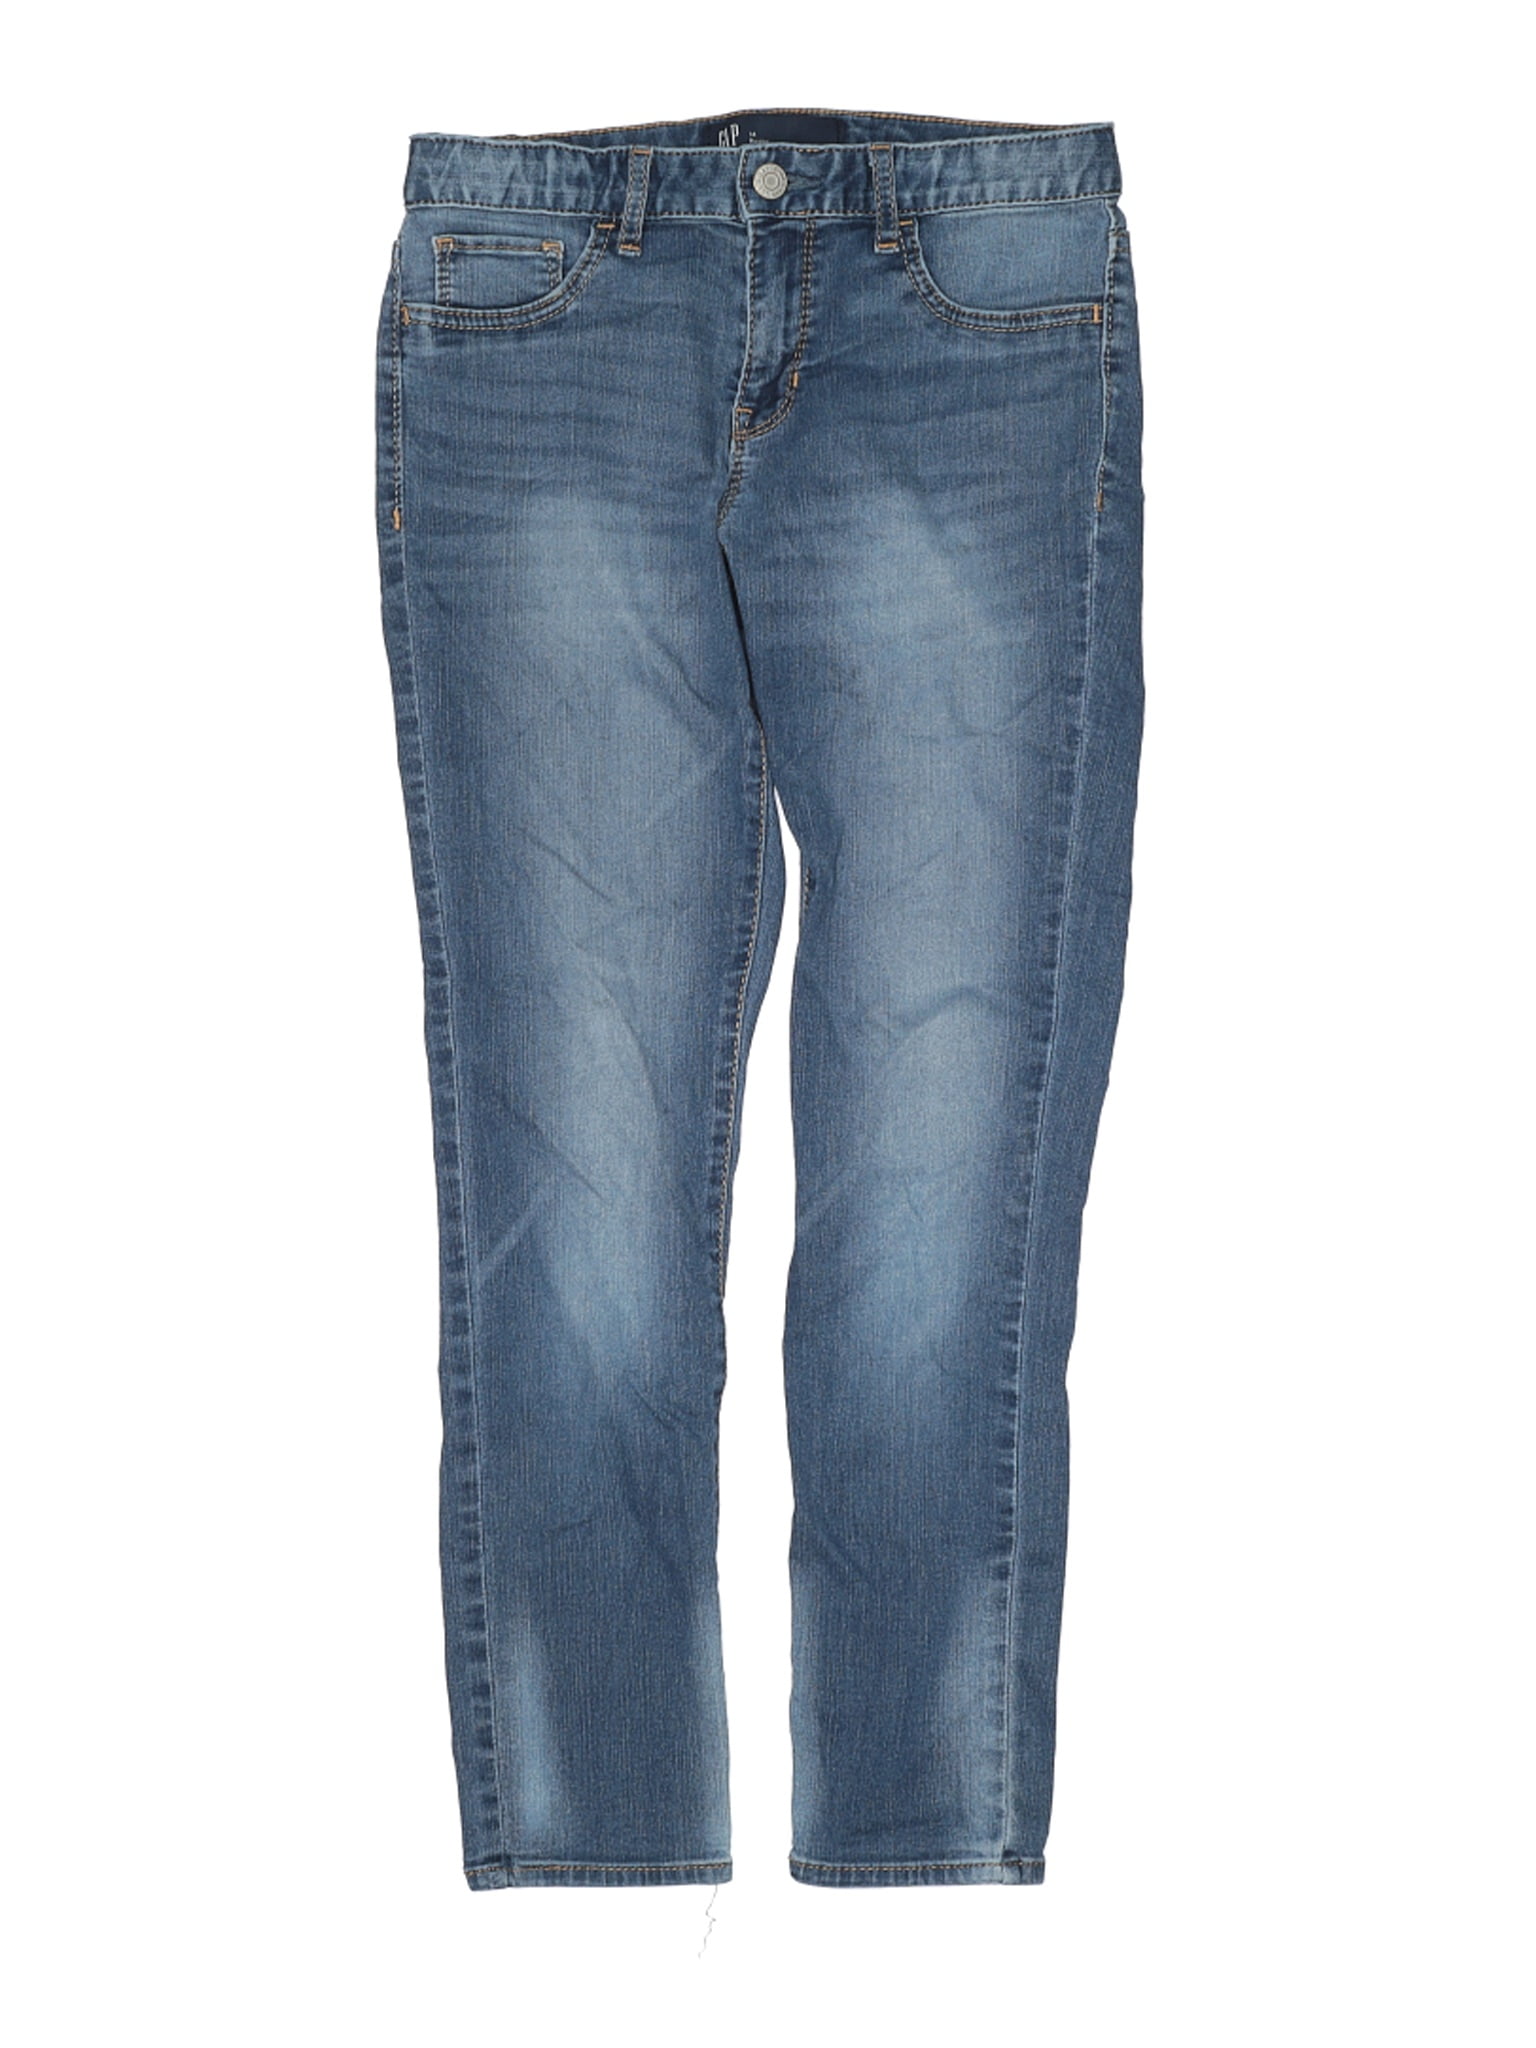 size 14 in gap jeans